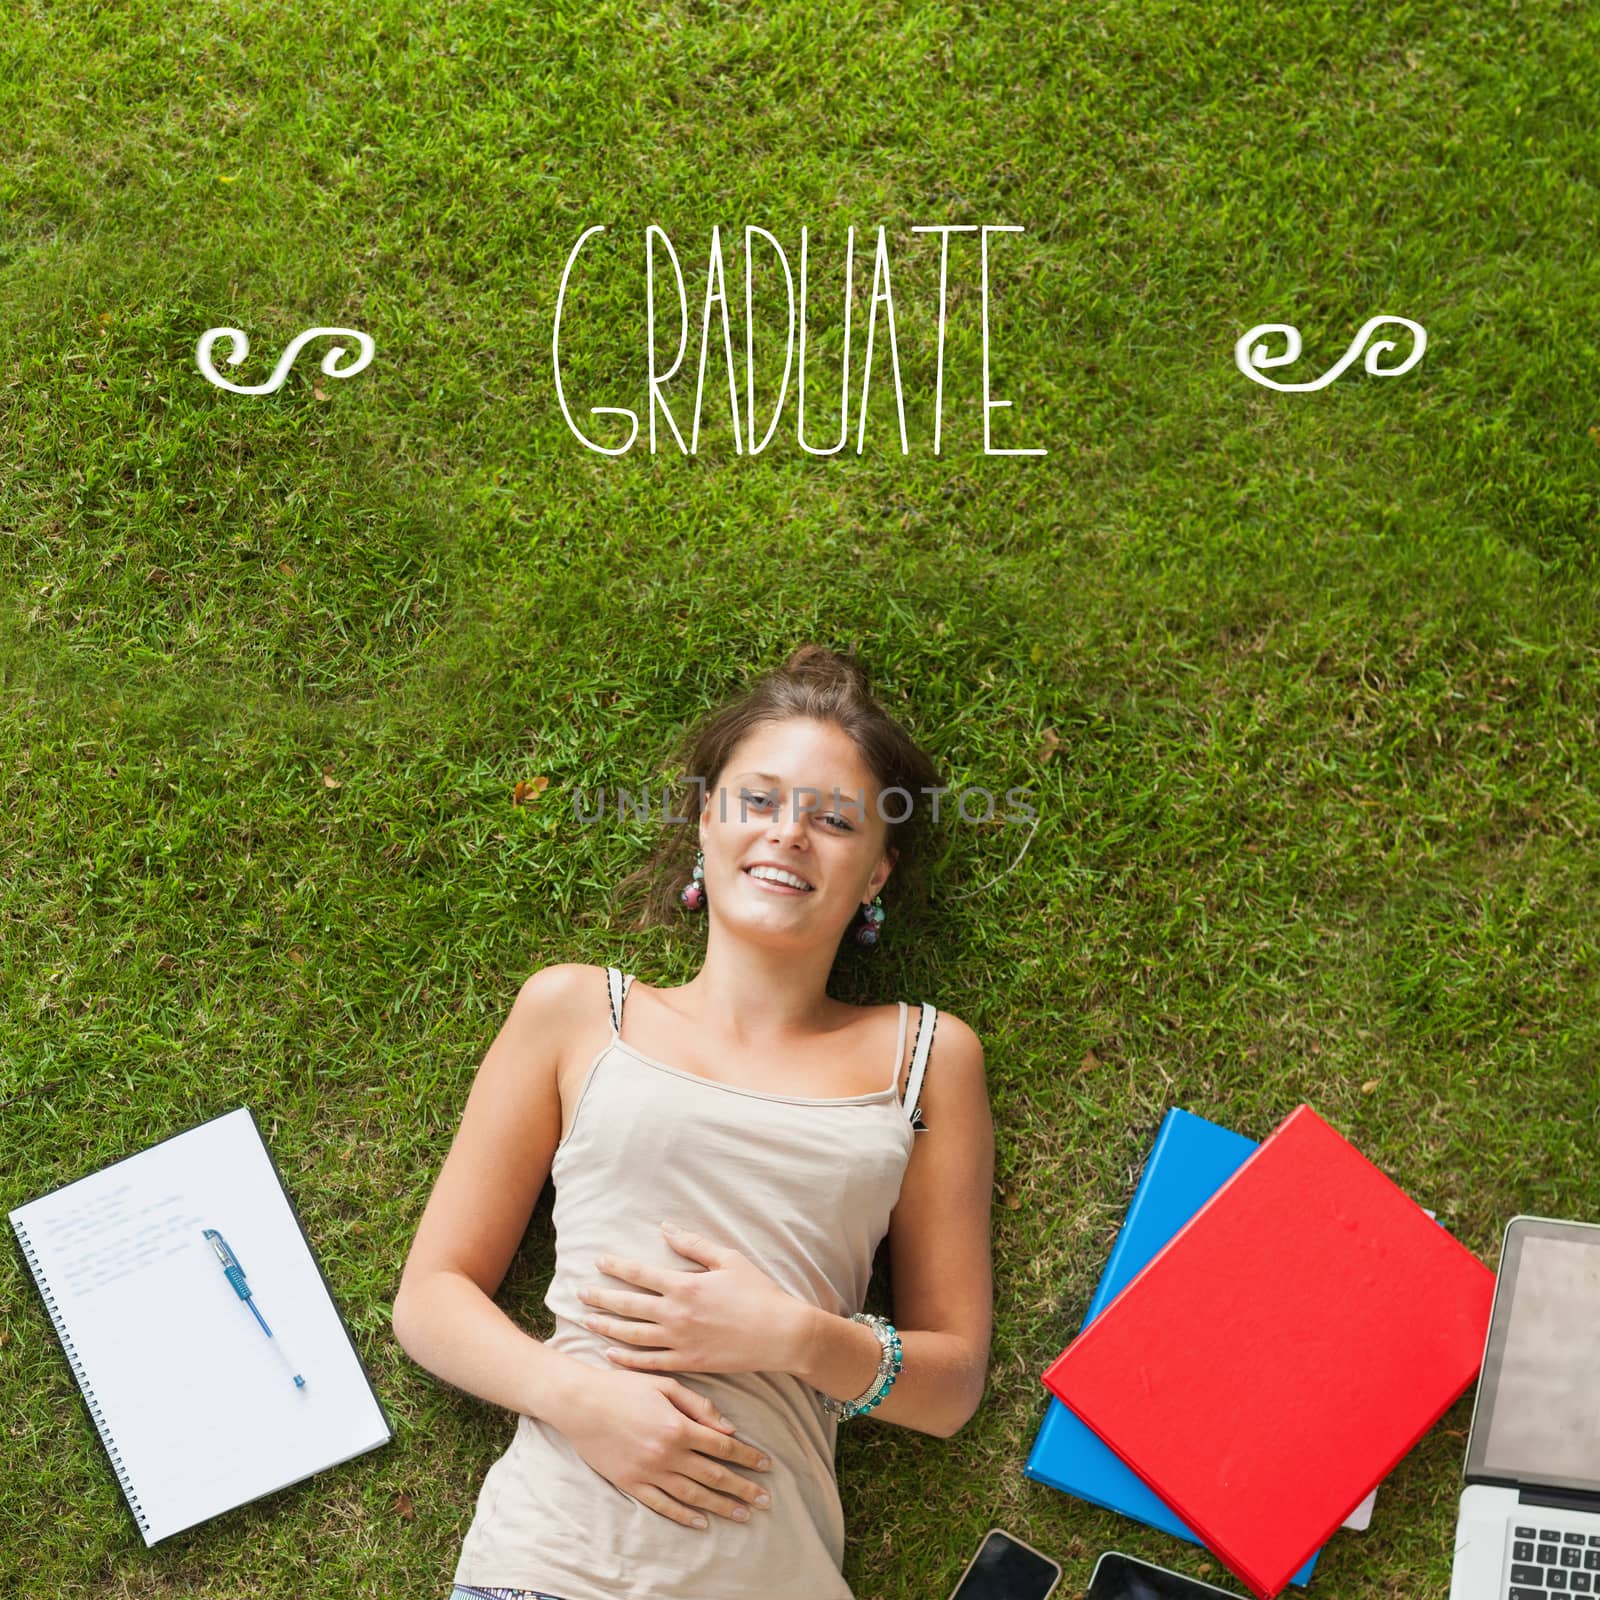 Graduate against pretty student lying on grass by Wavebreakmedia